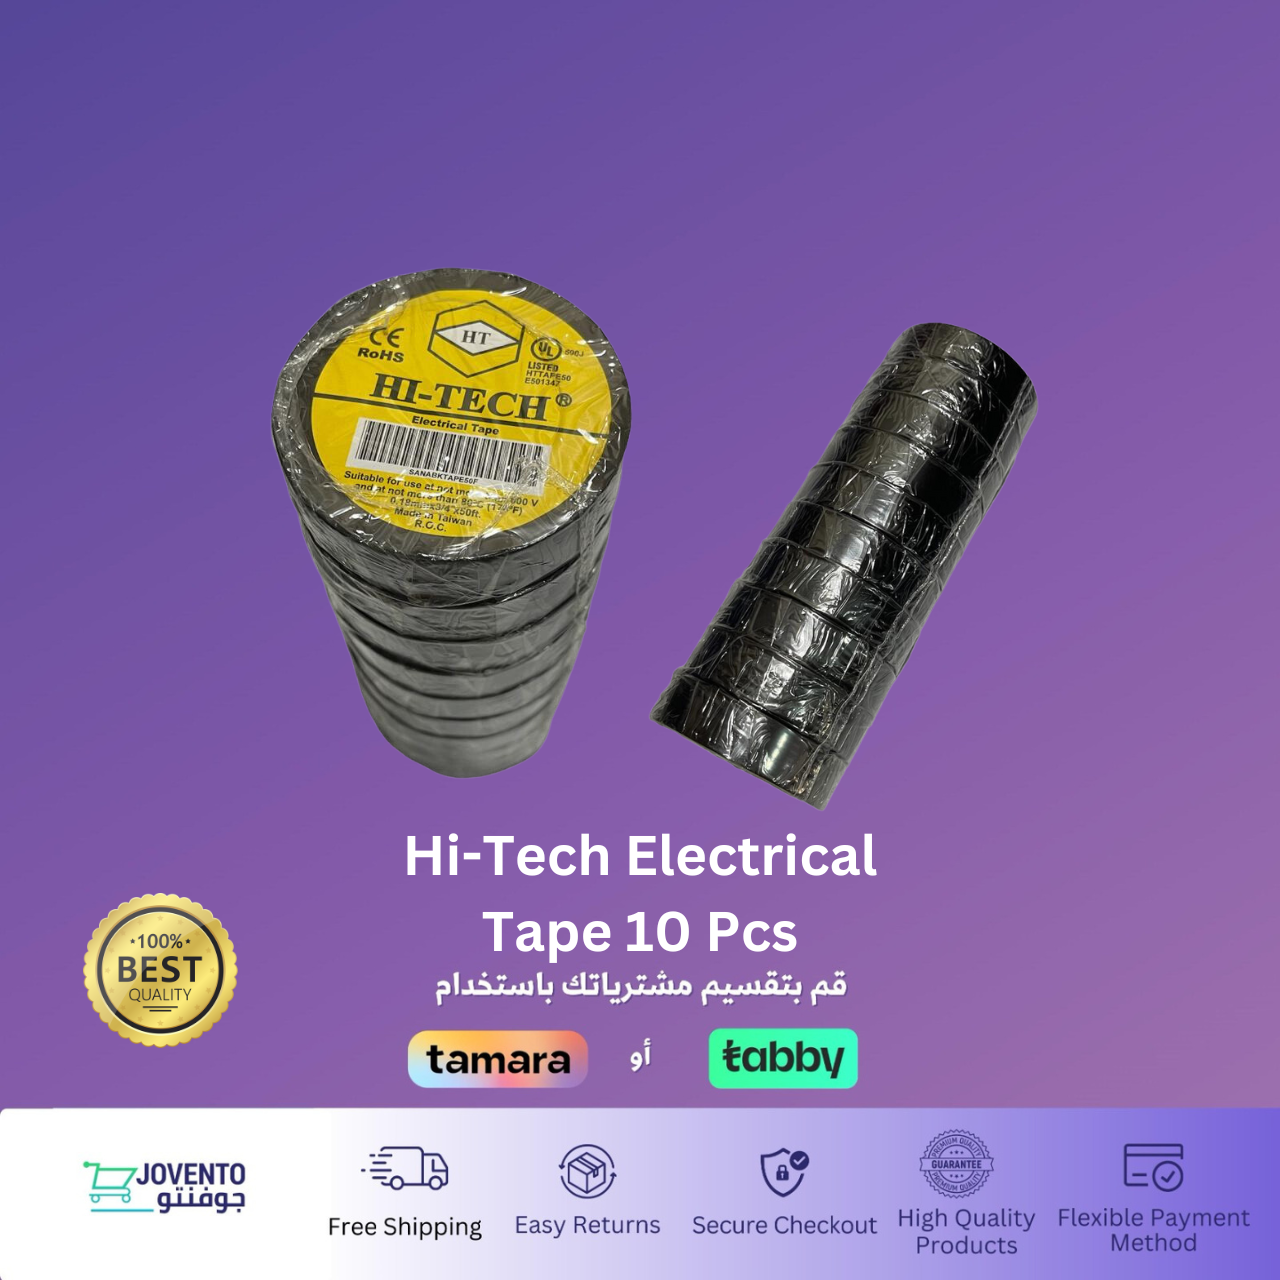 Hi-Tech Electrical Tape